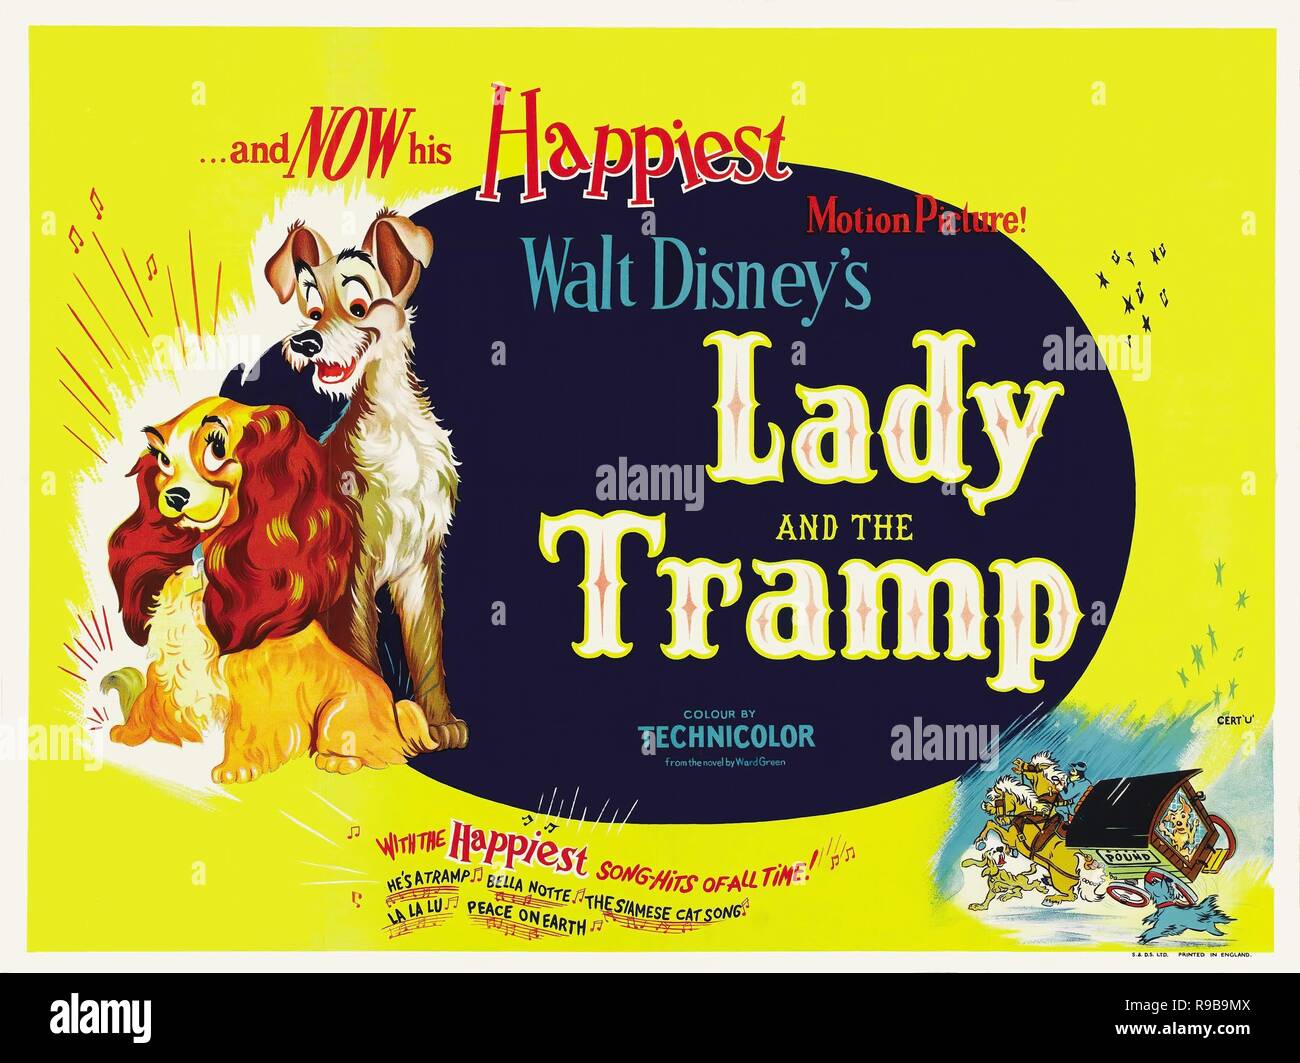 Original film title: THE LADY AND THE TRAMP. English title: THE LADY AND THE TRAMP. Year: 1955. Director: CLYDE GERONIMI; WILFRED JACKSON; HAMILTON LUSKE. Credit: WALT DISNEY PRODUCTIONS / Album Stock Photo